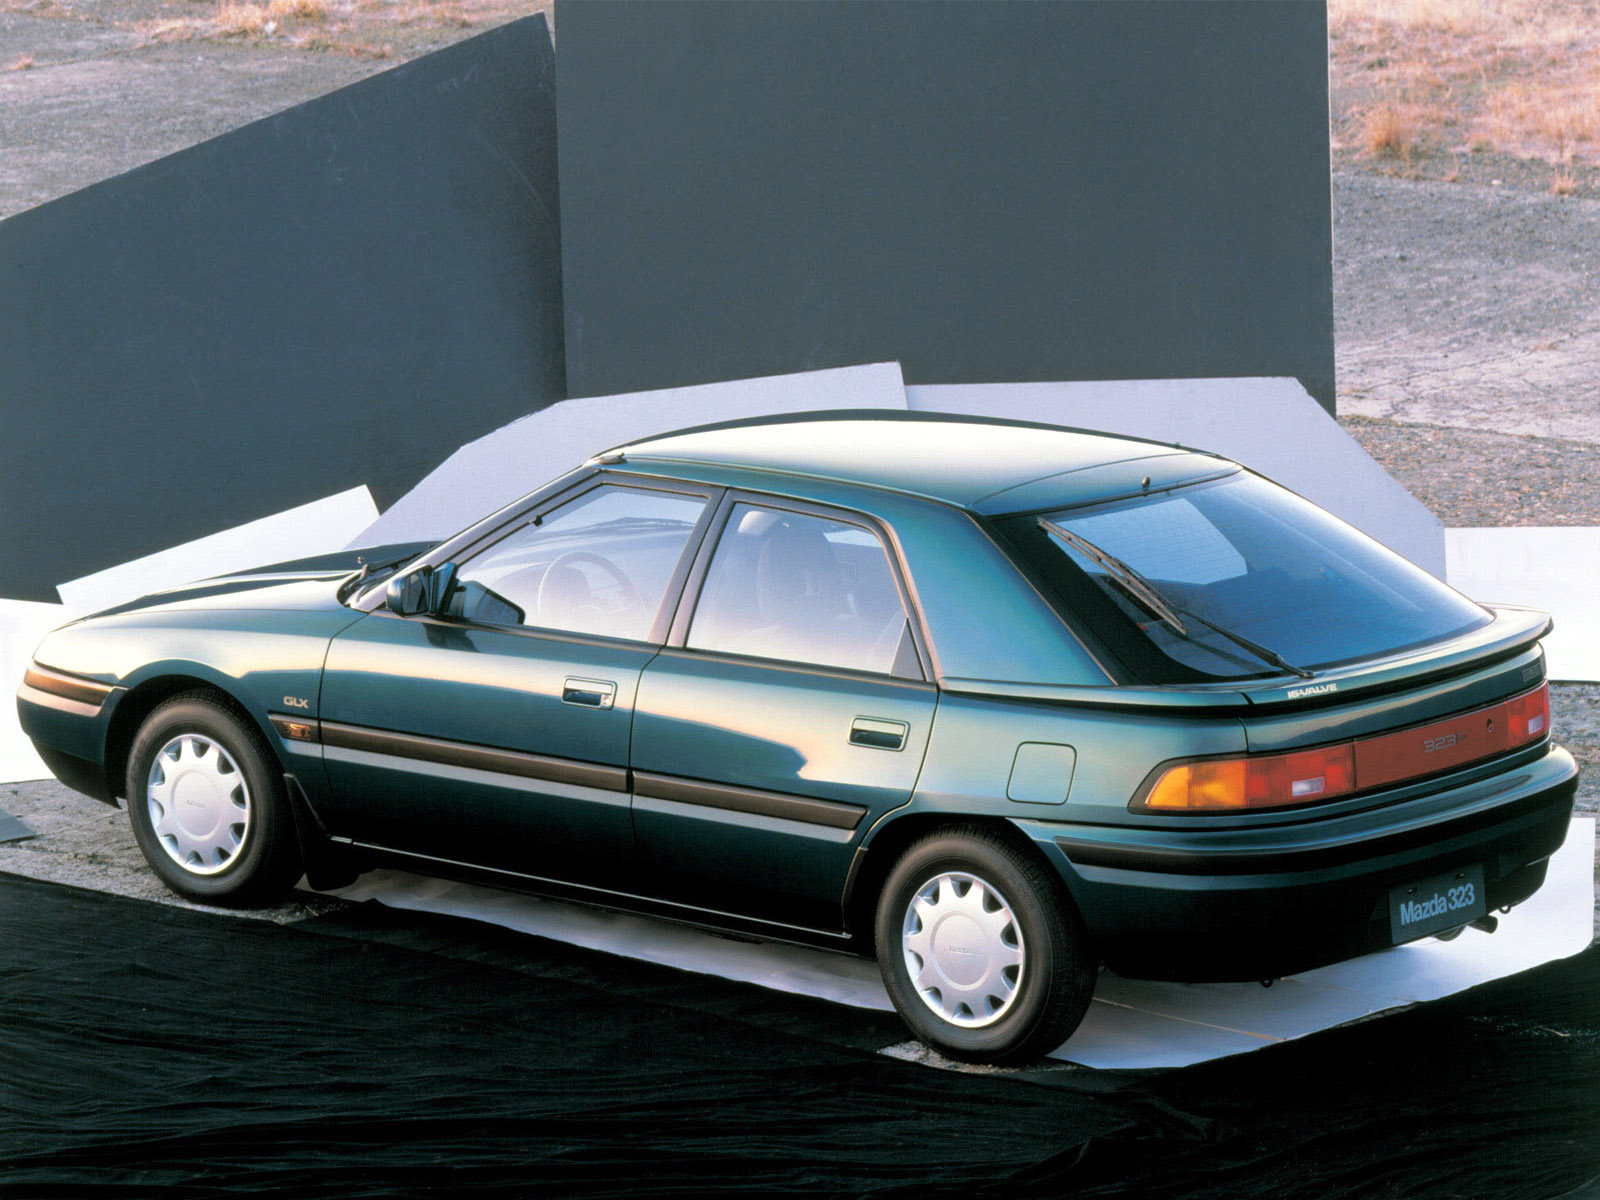 Mad 4 Wheels - 1989 Mazda 323 F ( BG ) - Best quality free high ...